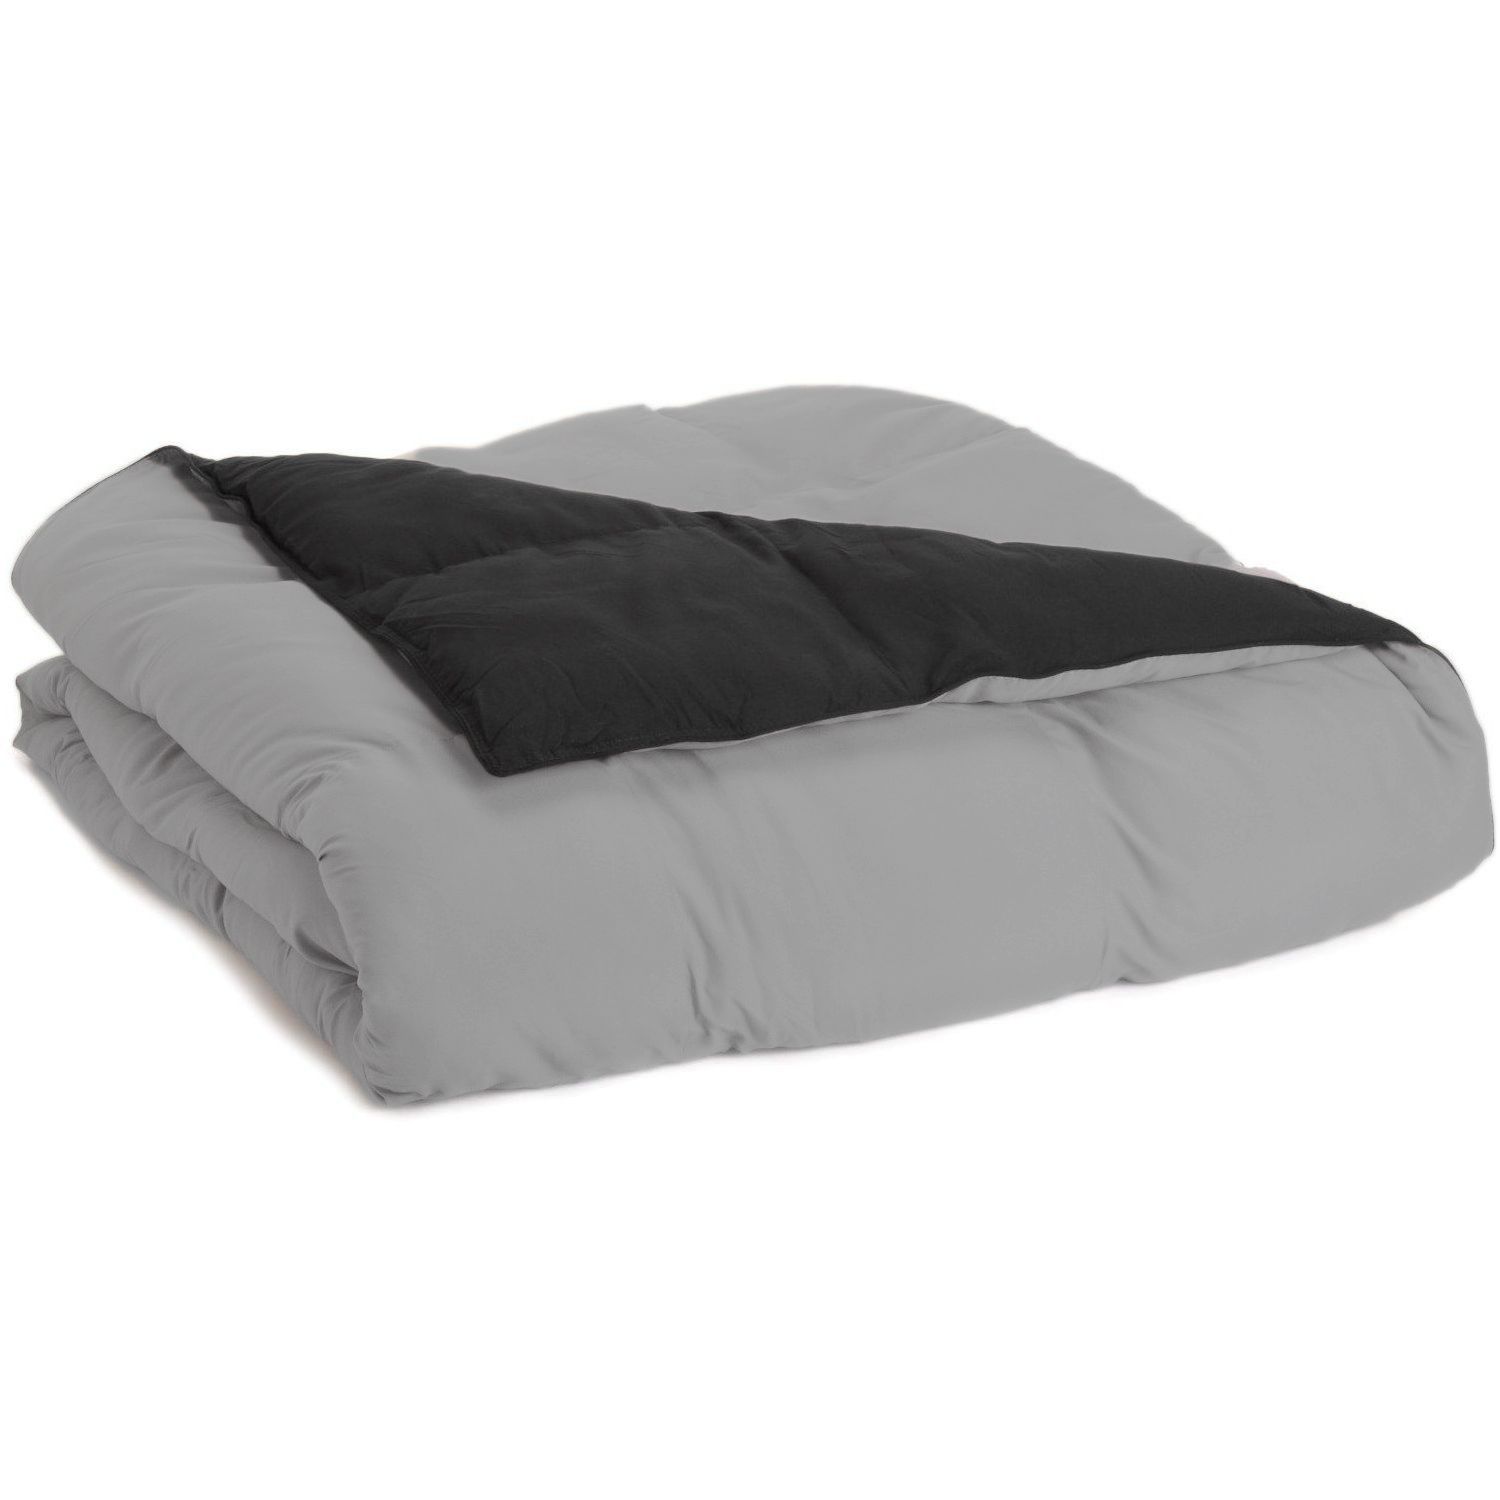 Superior Down Alternative Reversible Comforter, King, Black/ Grey - image 1 of 3